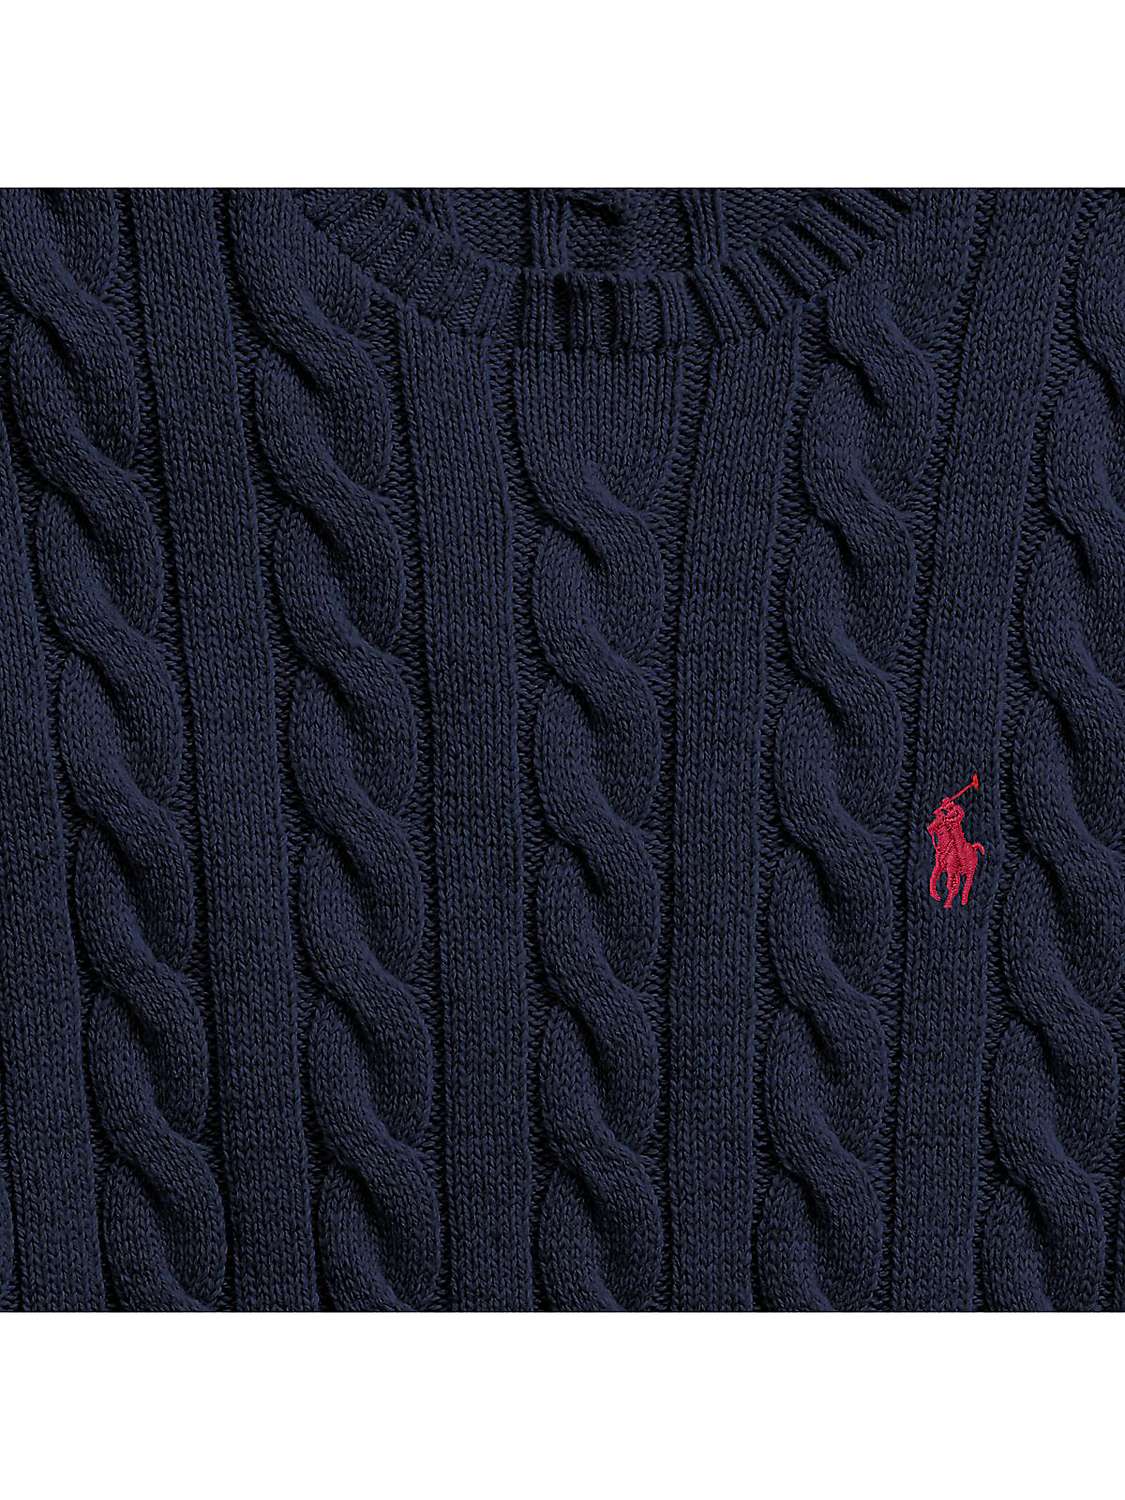 Buy Polo Ralph Lauren Cotton Cable Knit Jumper Online at johnlewis.com